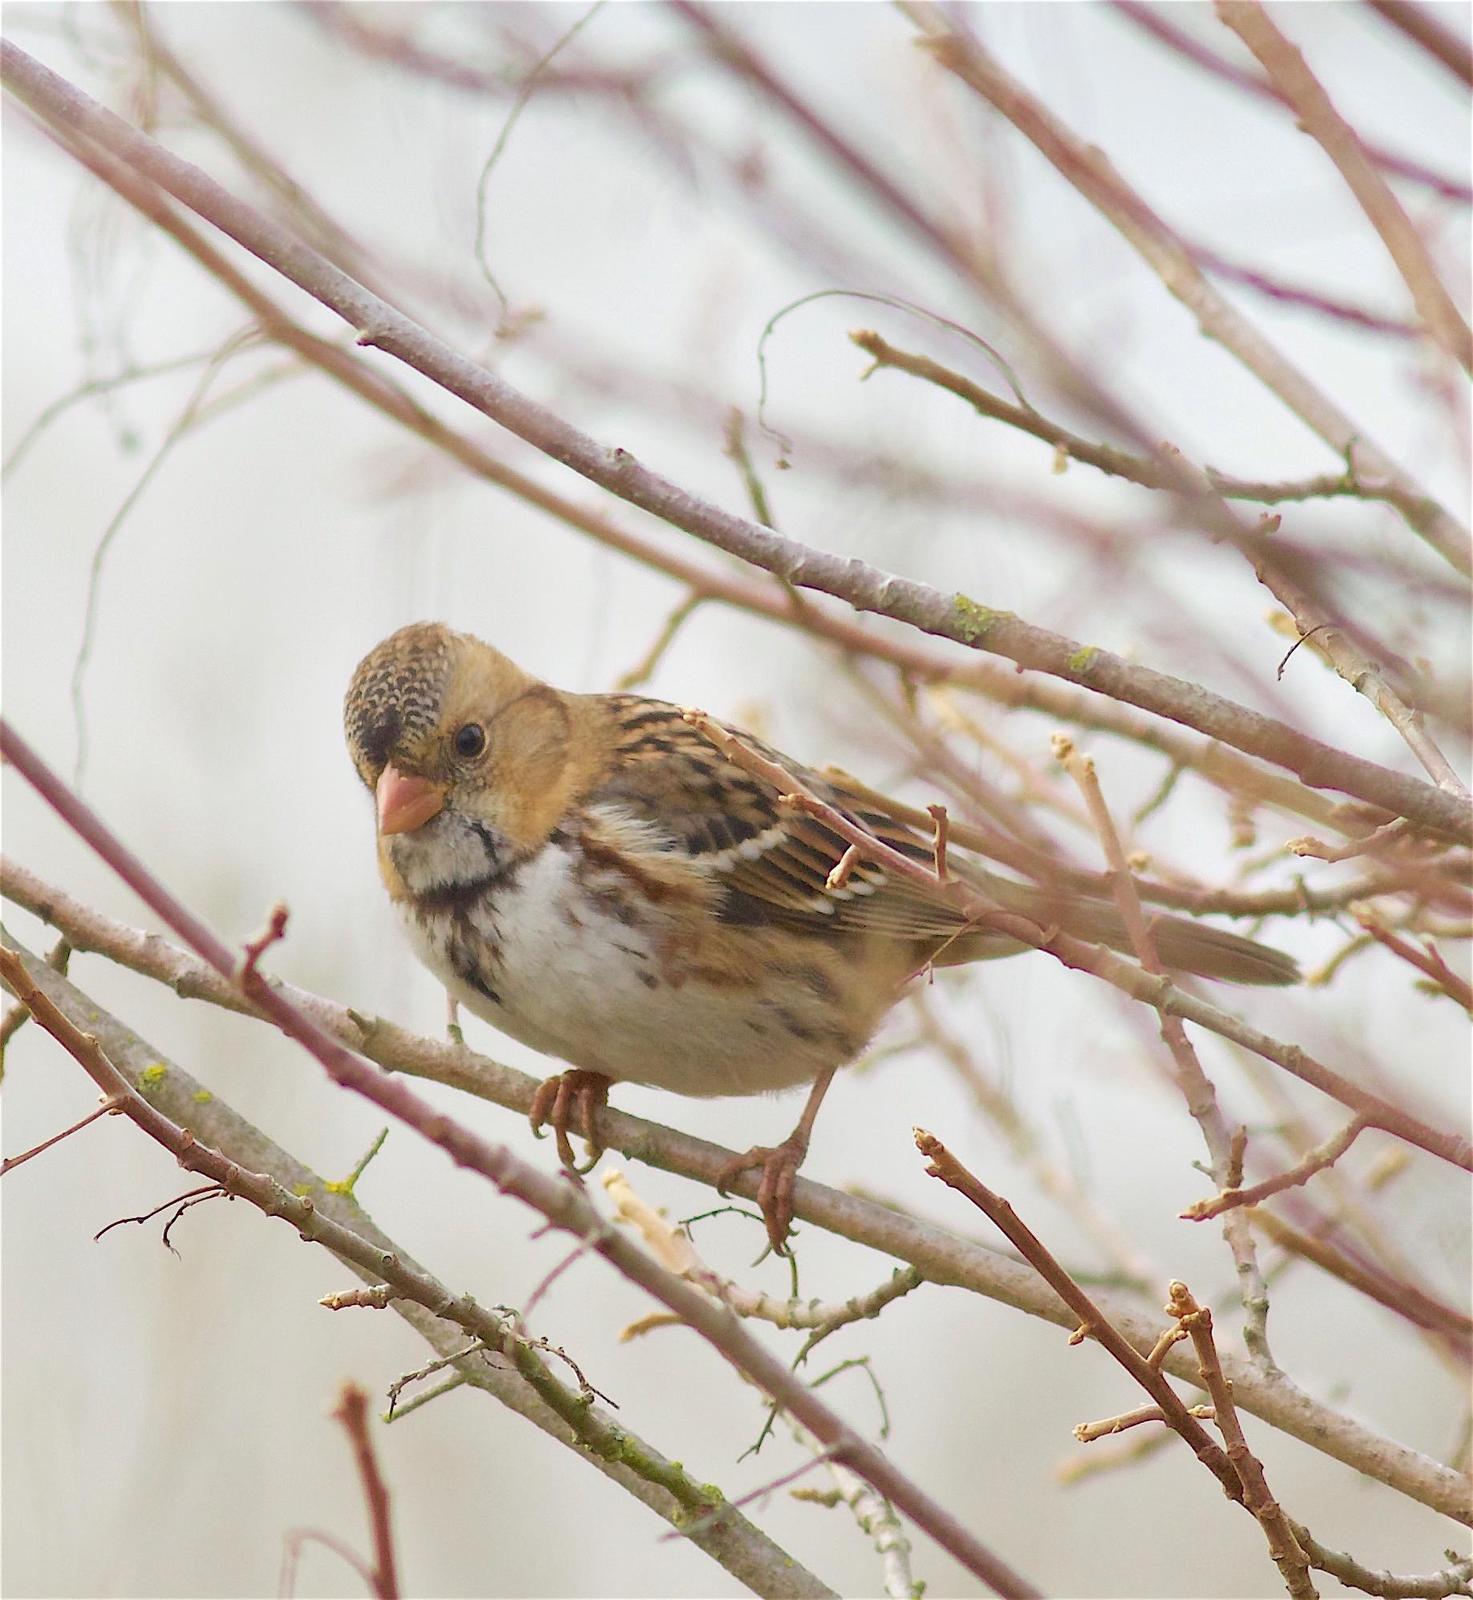 Harris's Sparrow Photo by Kathryn Keith